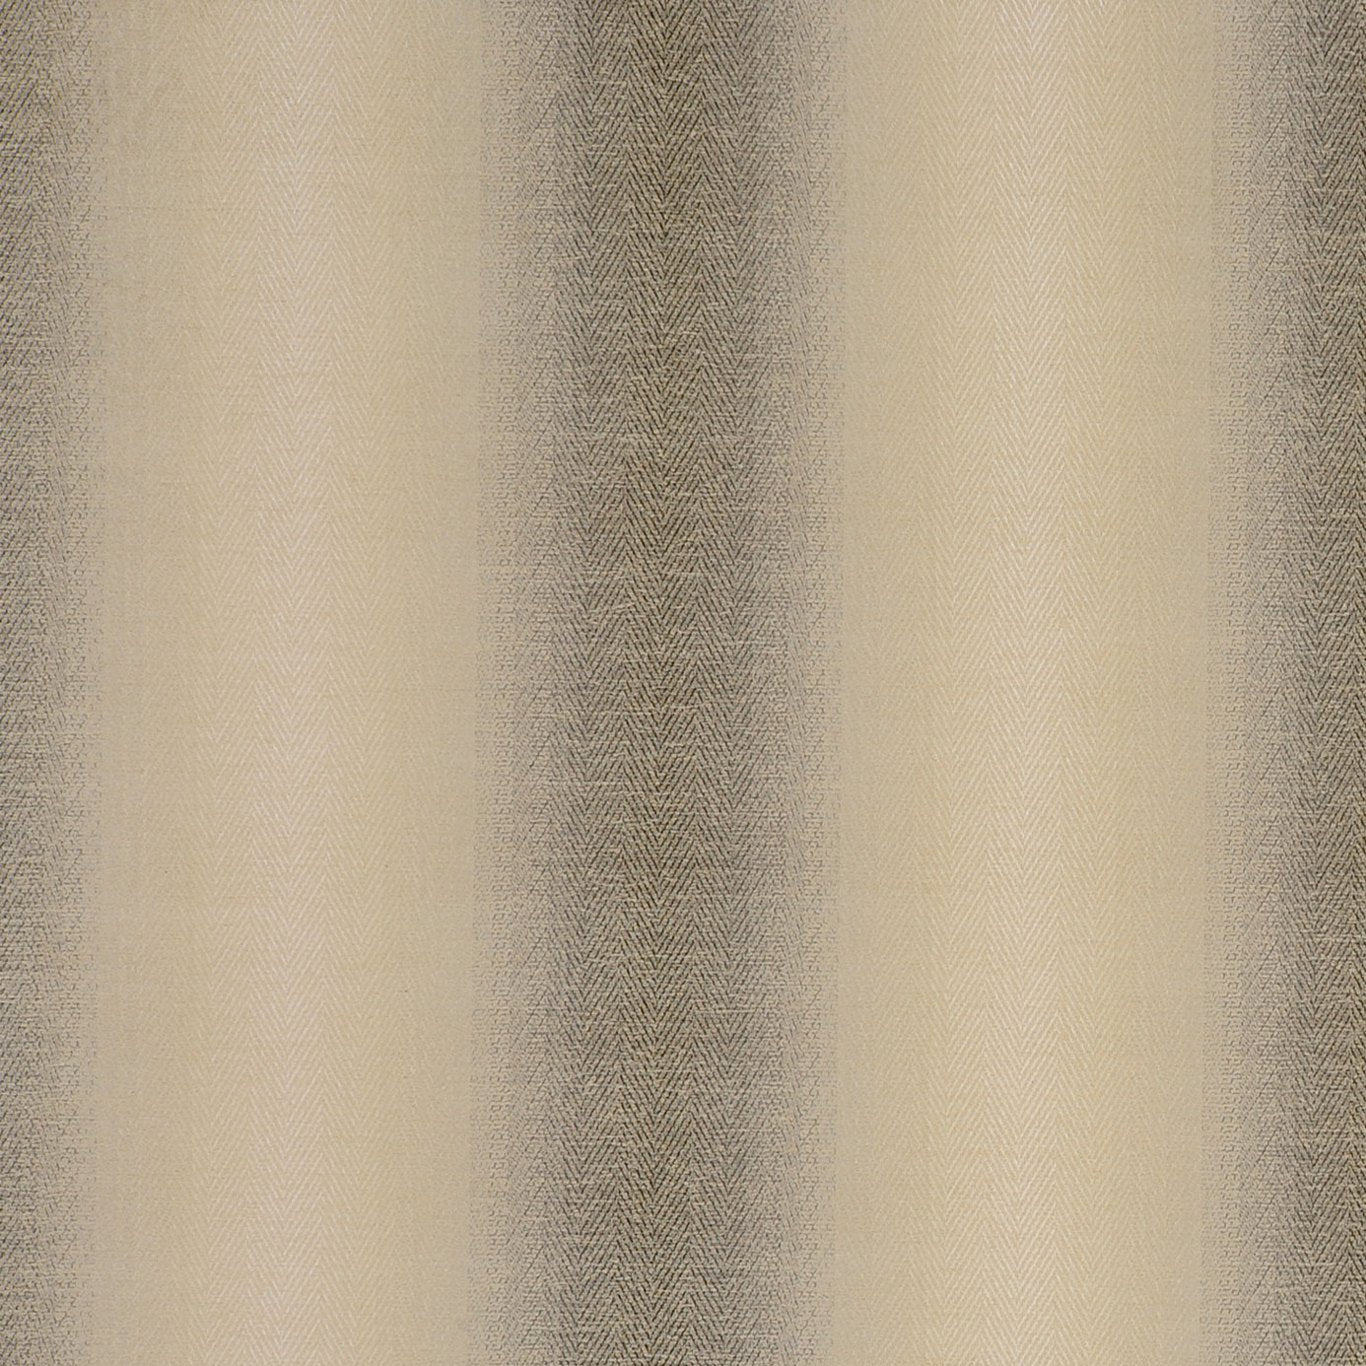 Antico Fabric by Clarke & Clarke - F0789/03 - Charcoal